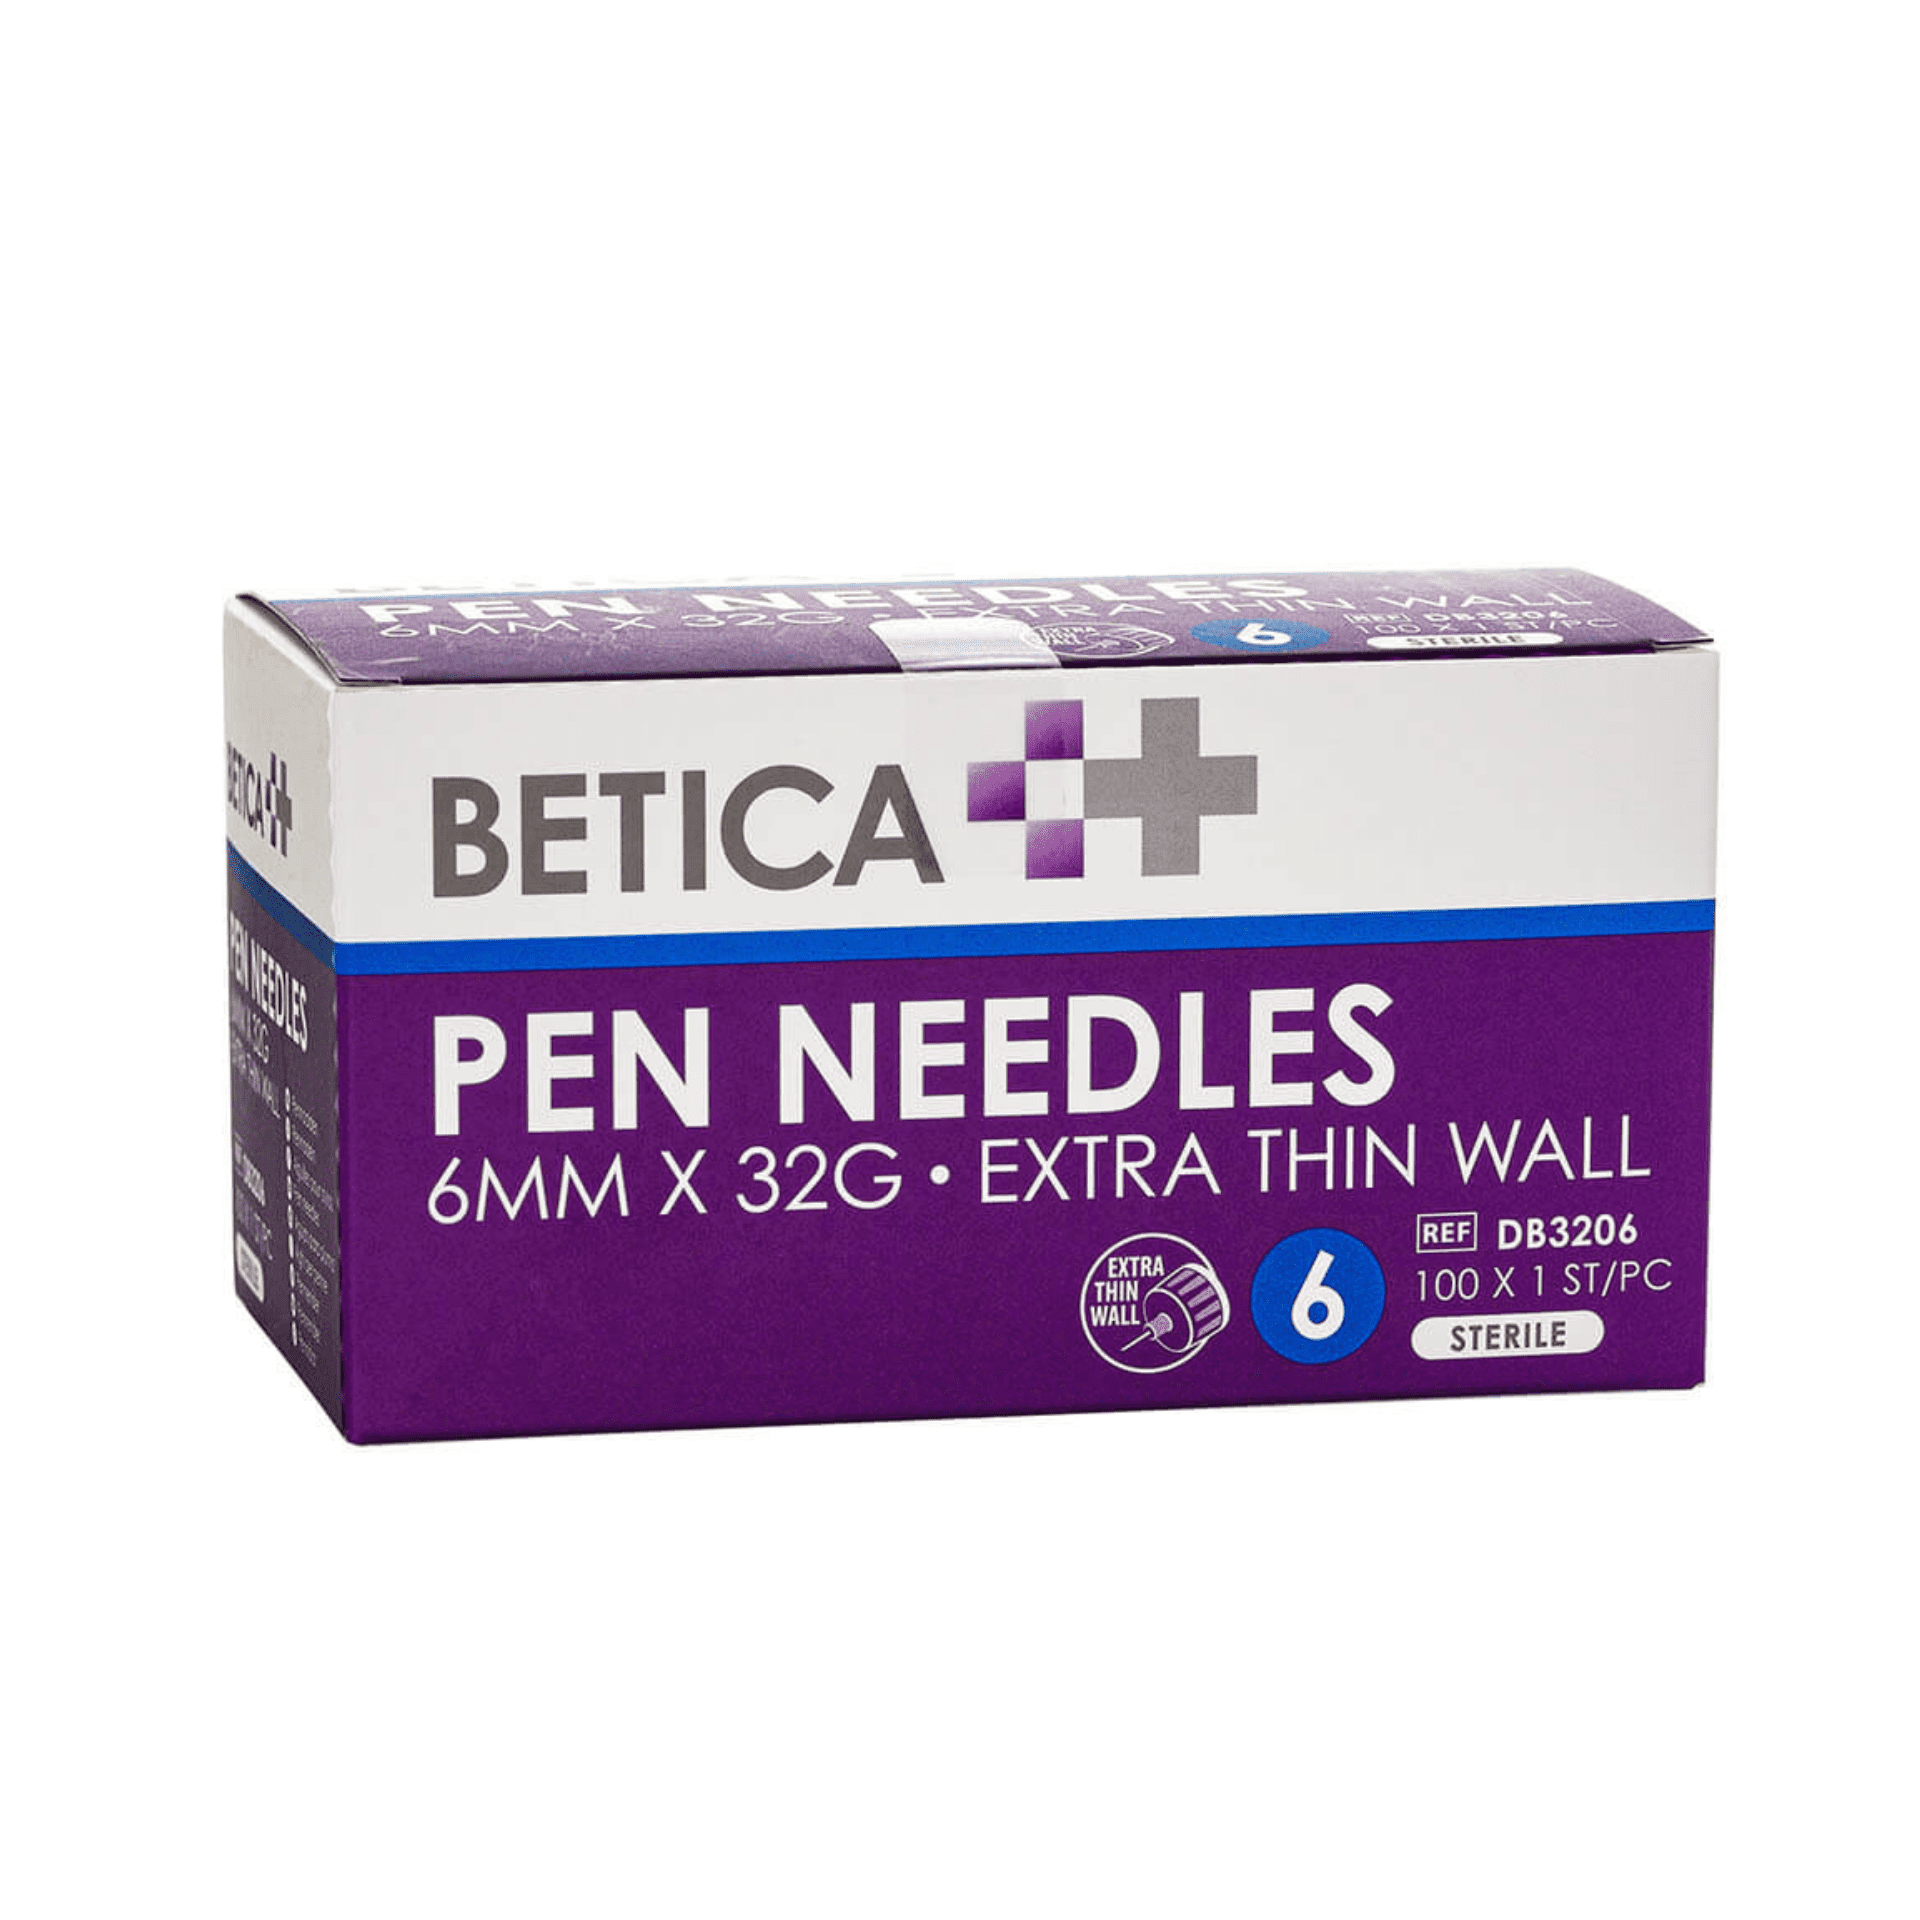 Betica Pen Needles 6 mm 32 g Extra Thin Wall 